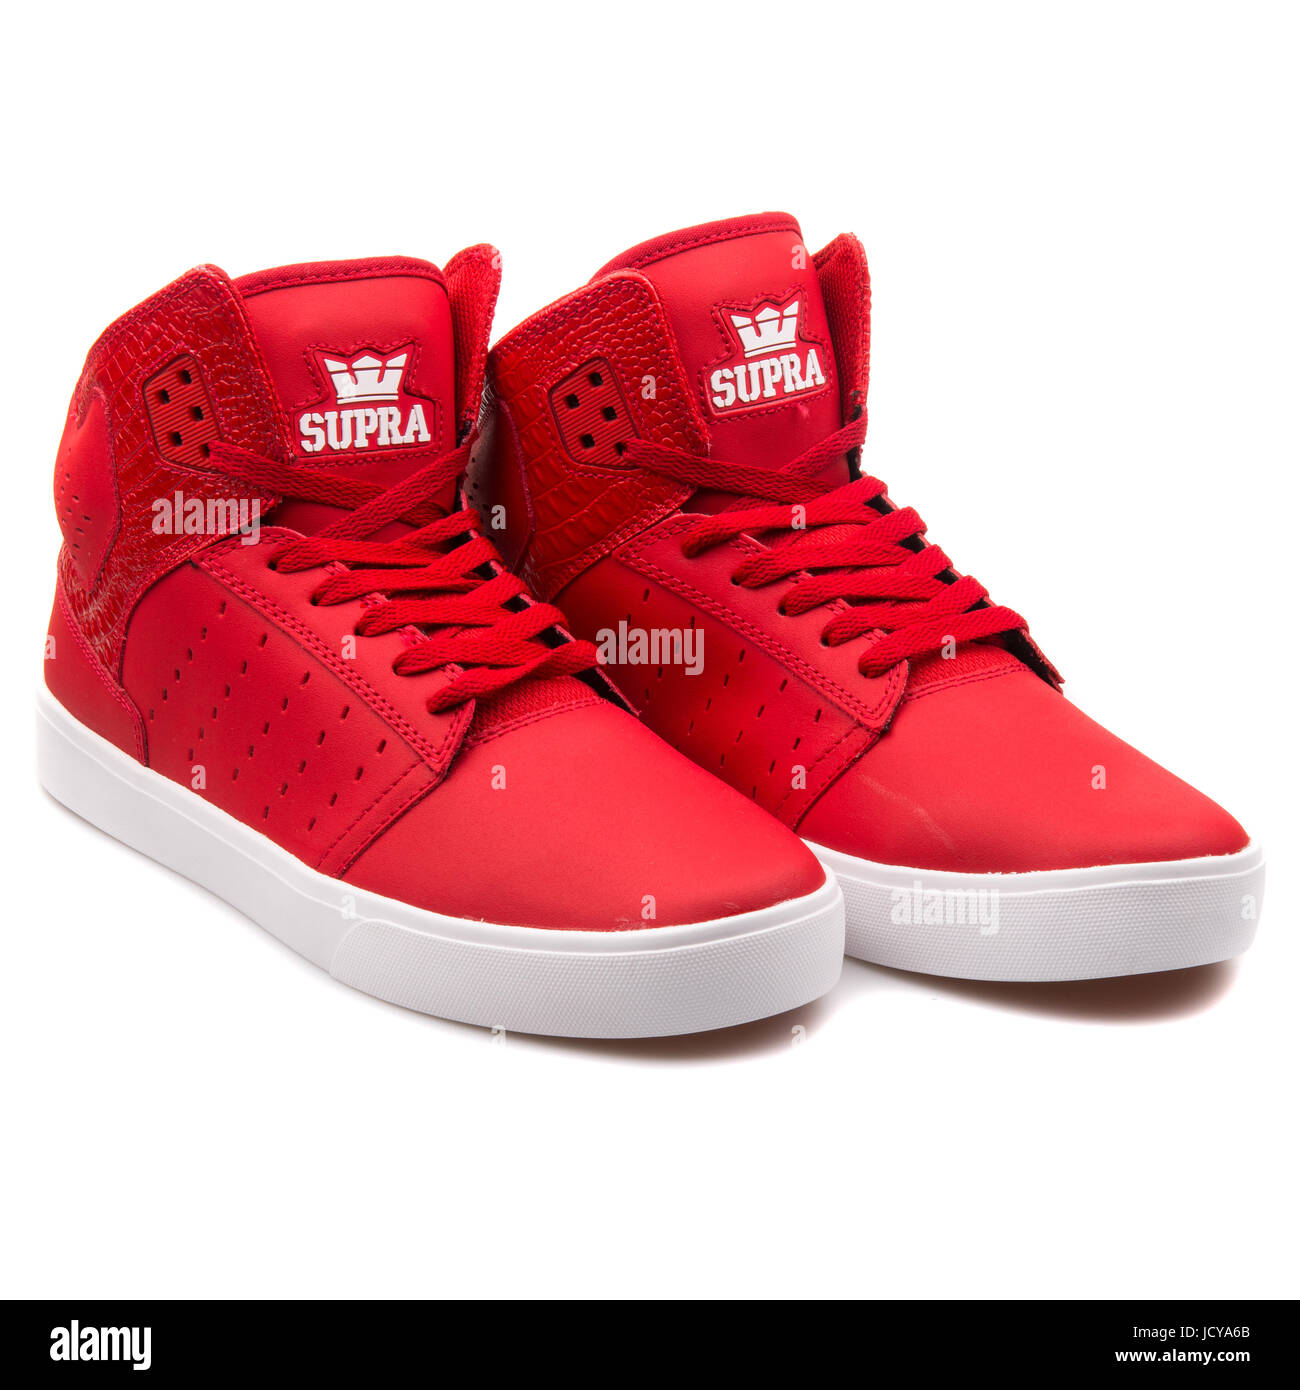 Supra Atom Cardinal-Off Red White Men's Sportive Shoes - S91021 Stock Photo  - Alamy